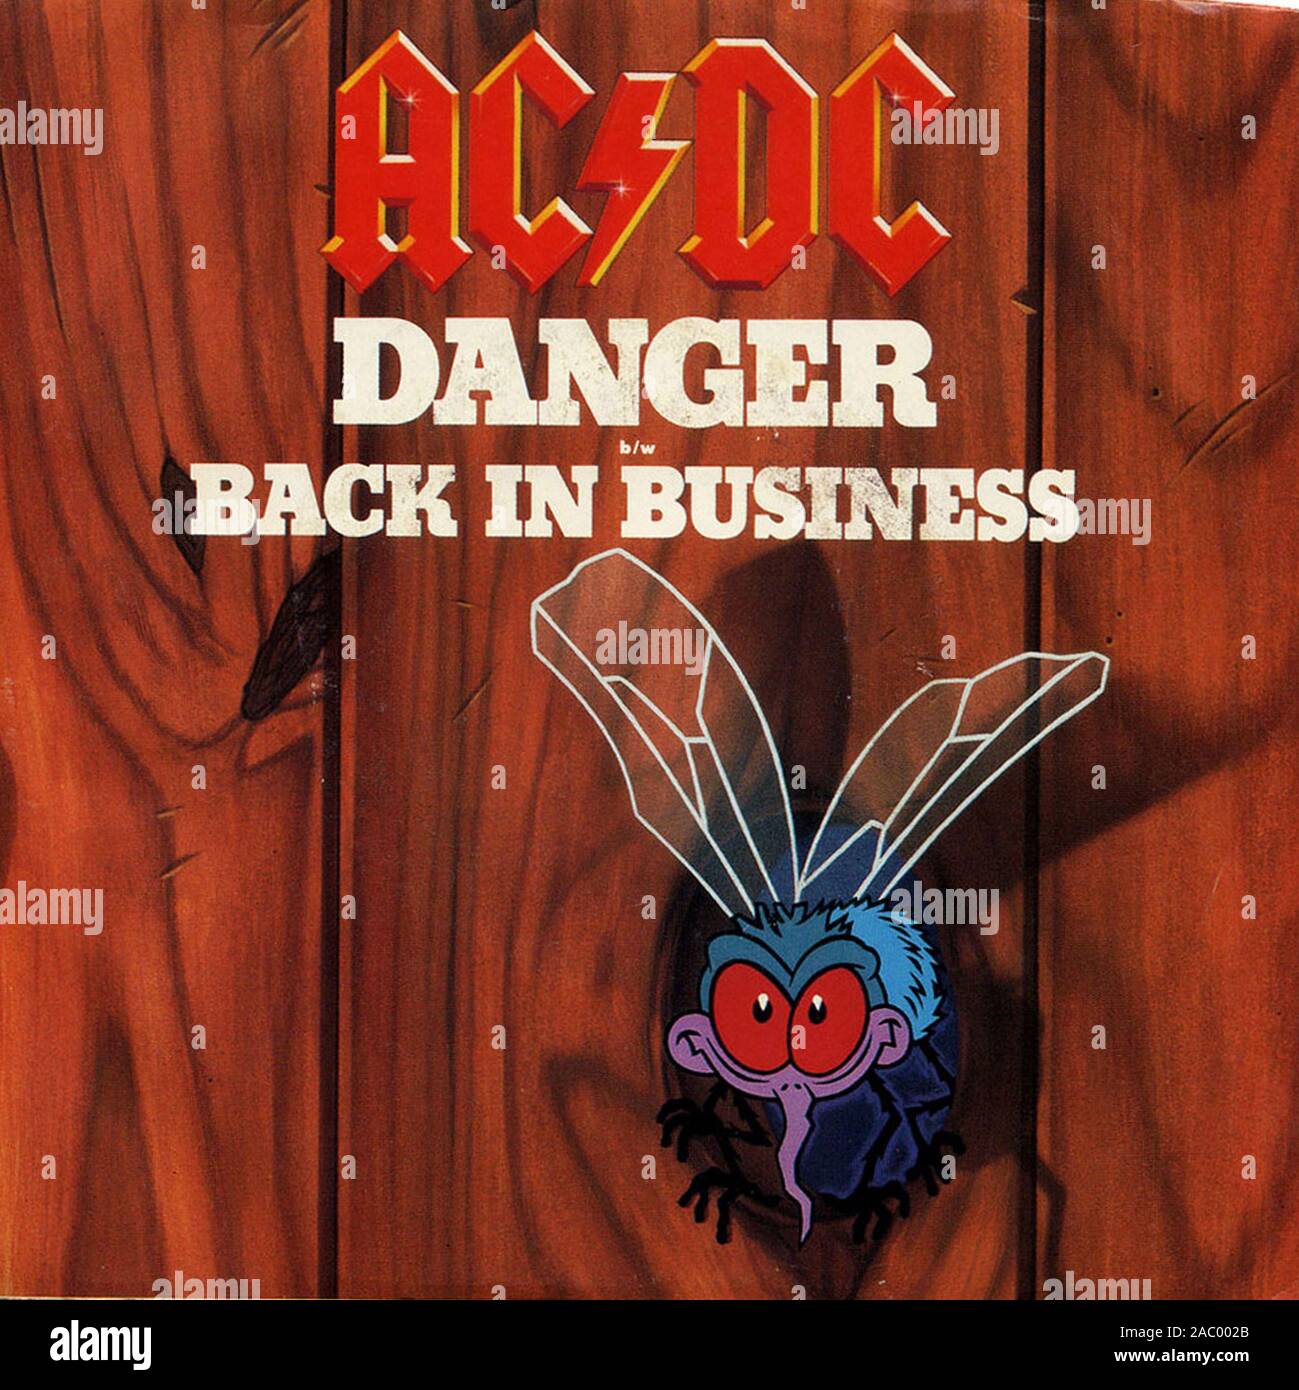 Danger - vinyl album cover Stock Photo - Alamy